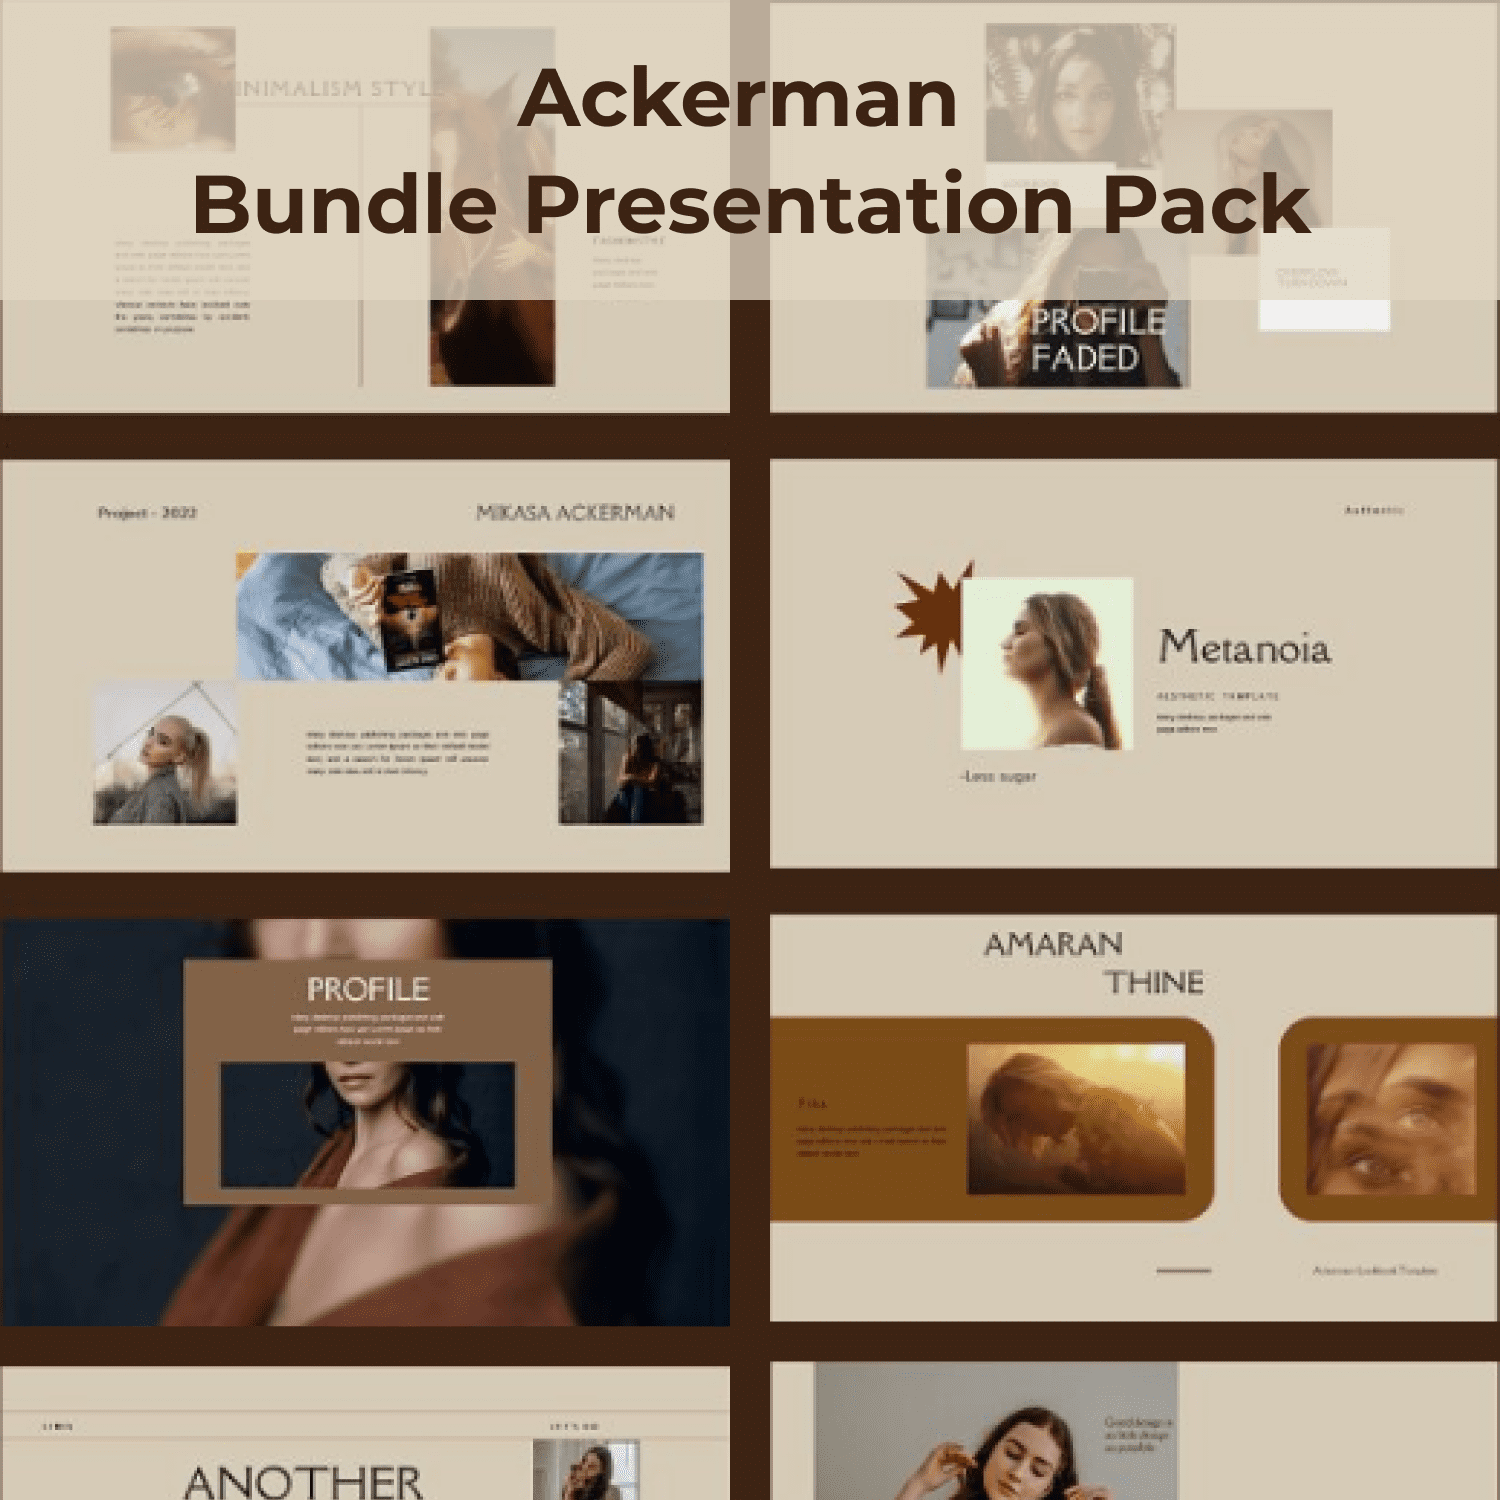 Ackerman Bundle Presentation Pack cover image.